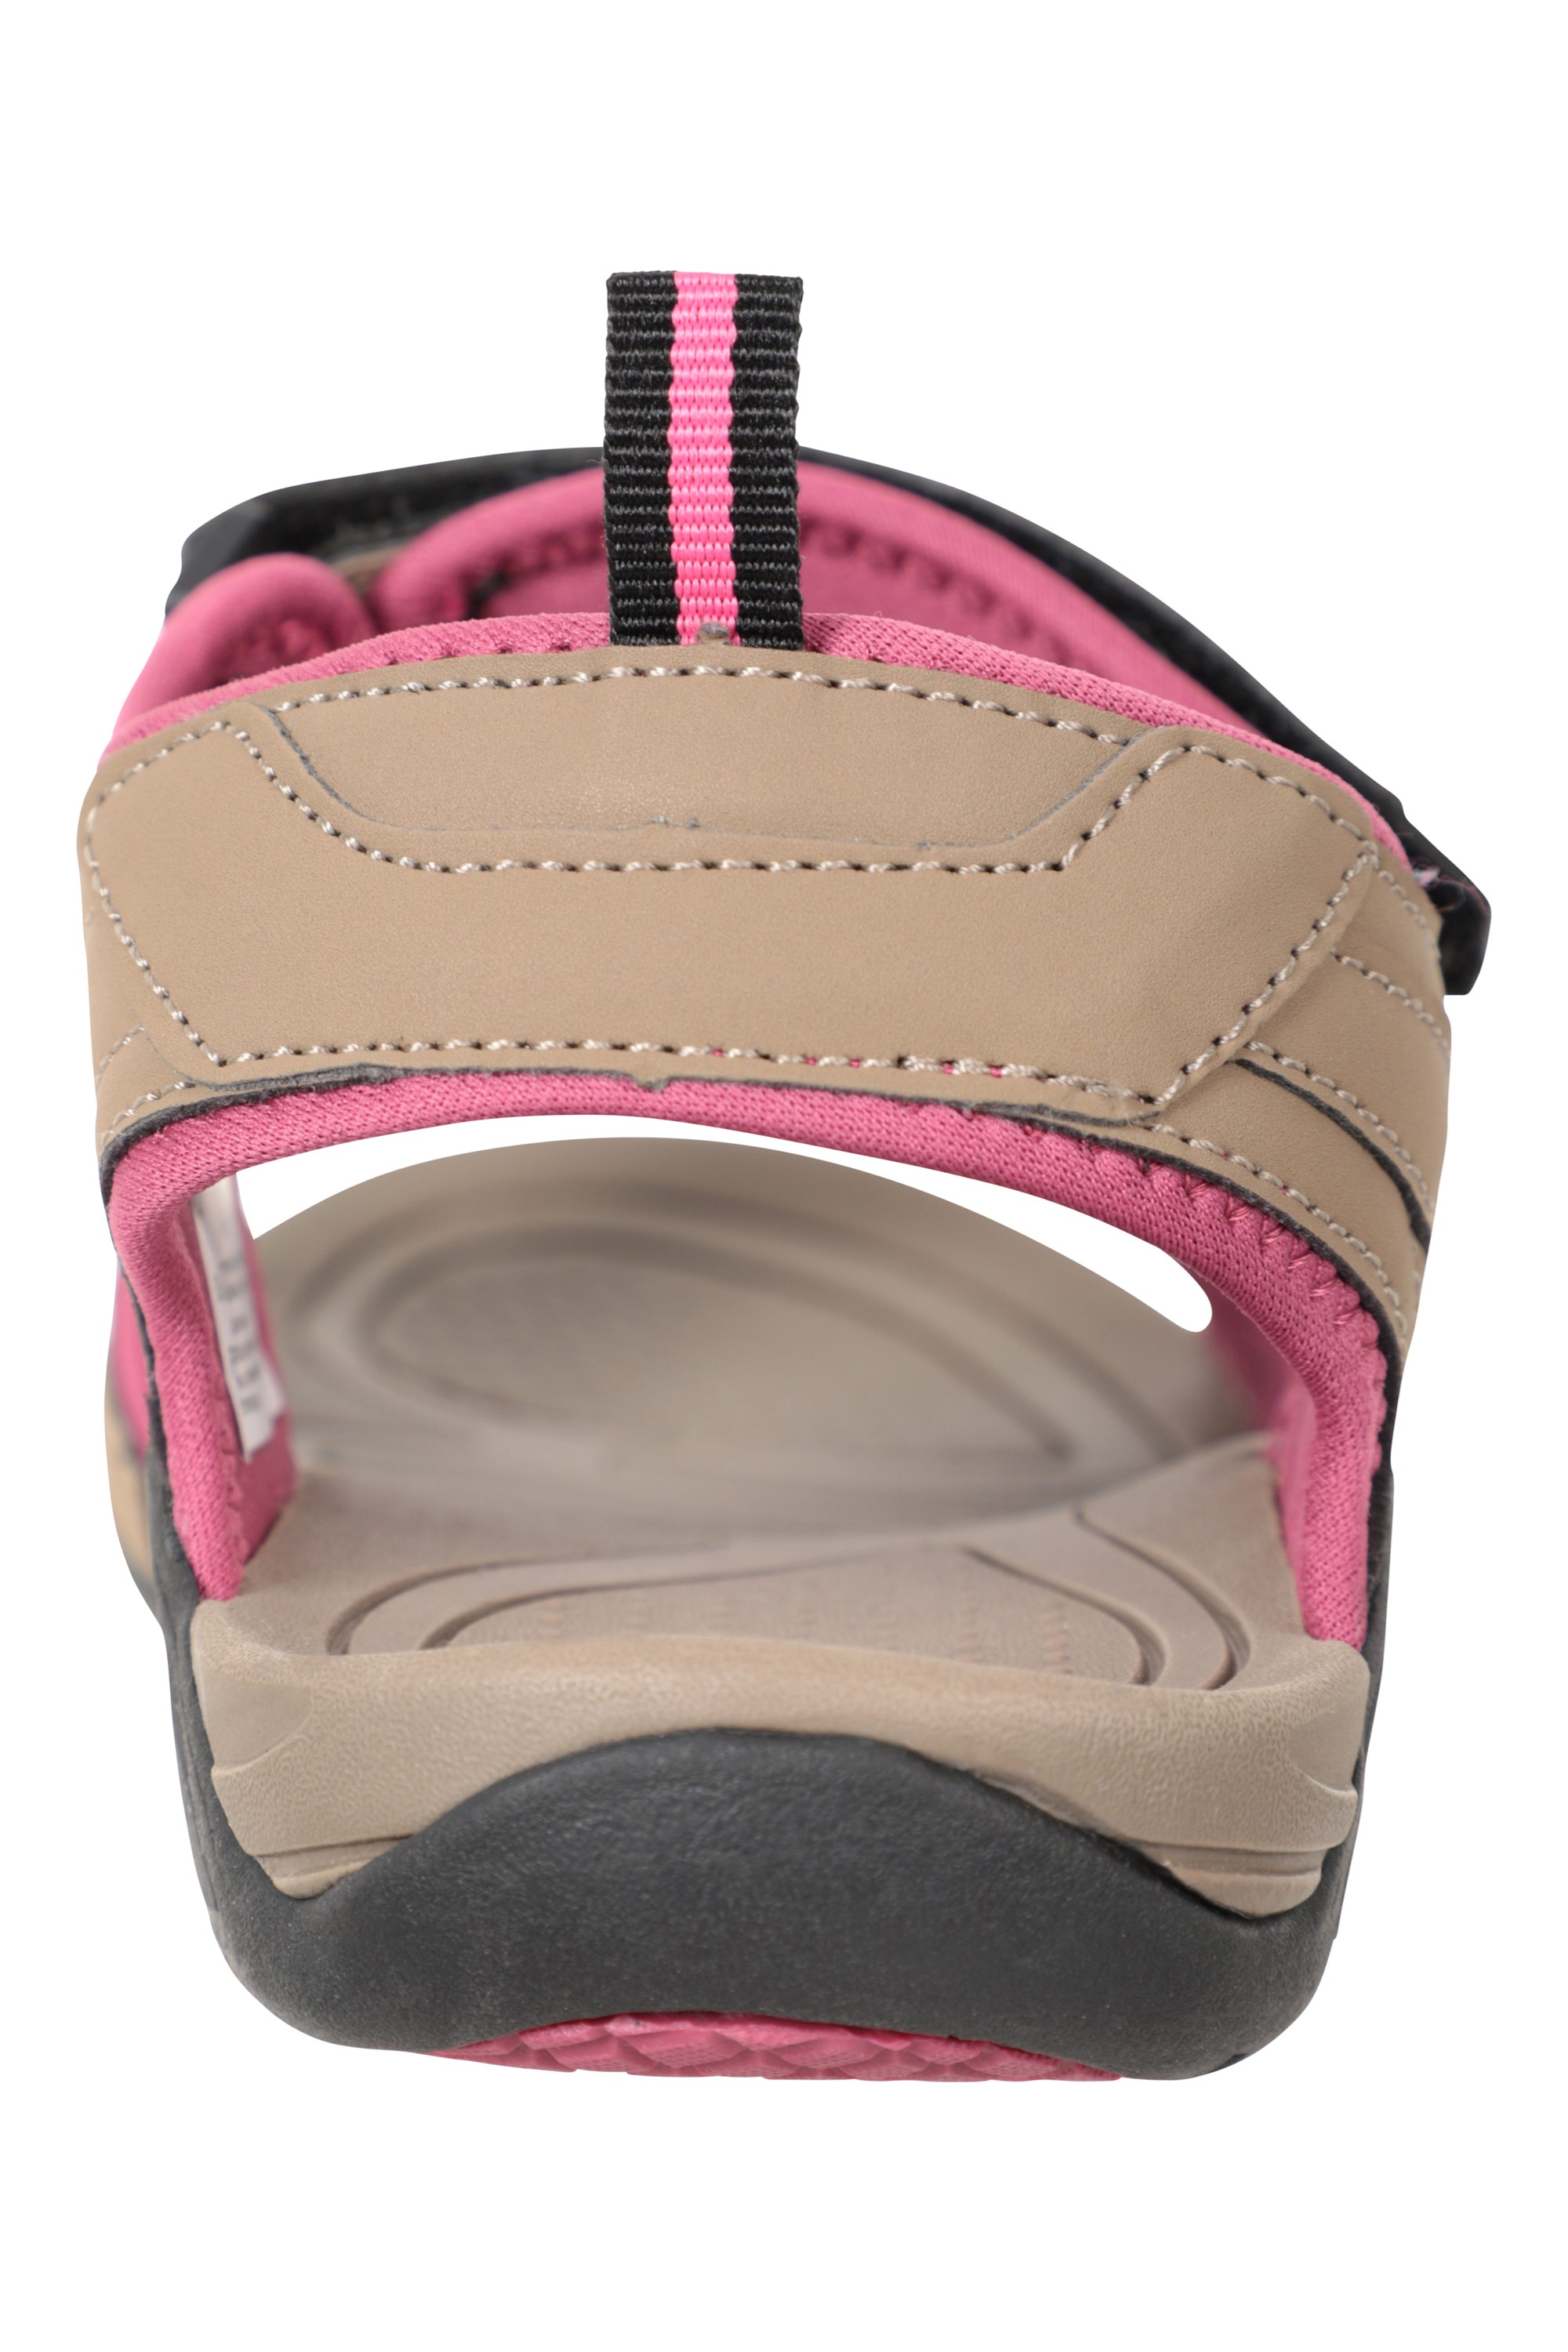 Sparx Women's Black Pink Floater Sandals-8 Kids UK (SS0535L) : Amazon.in:  Shoes & Handbags